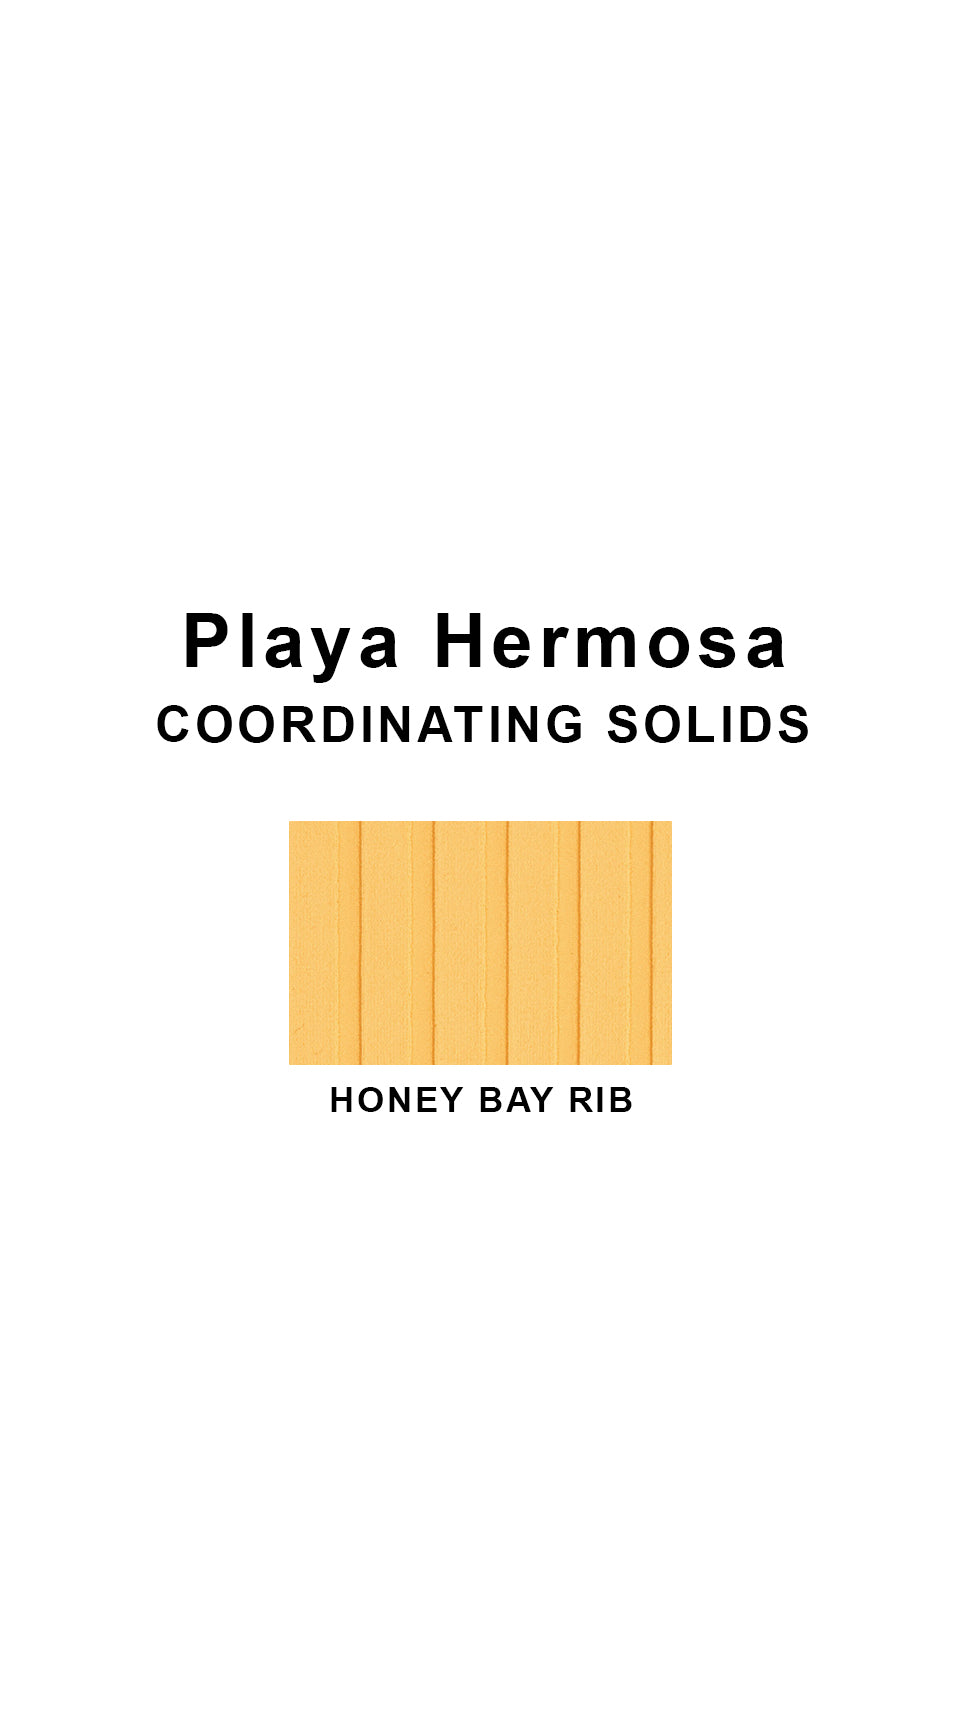 Coordinating solids chart for Playa Hermosa swimsuit print: Honey Bay Rib